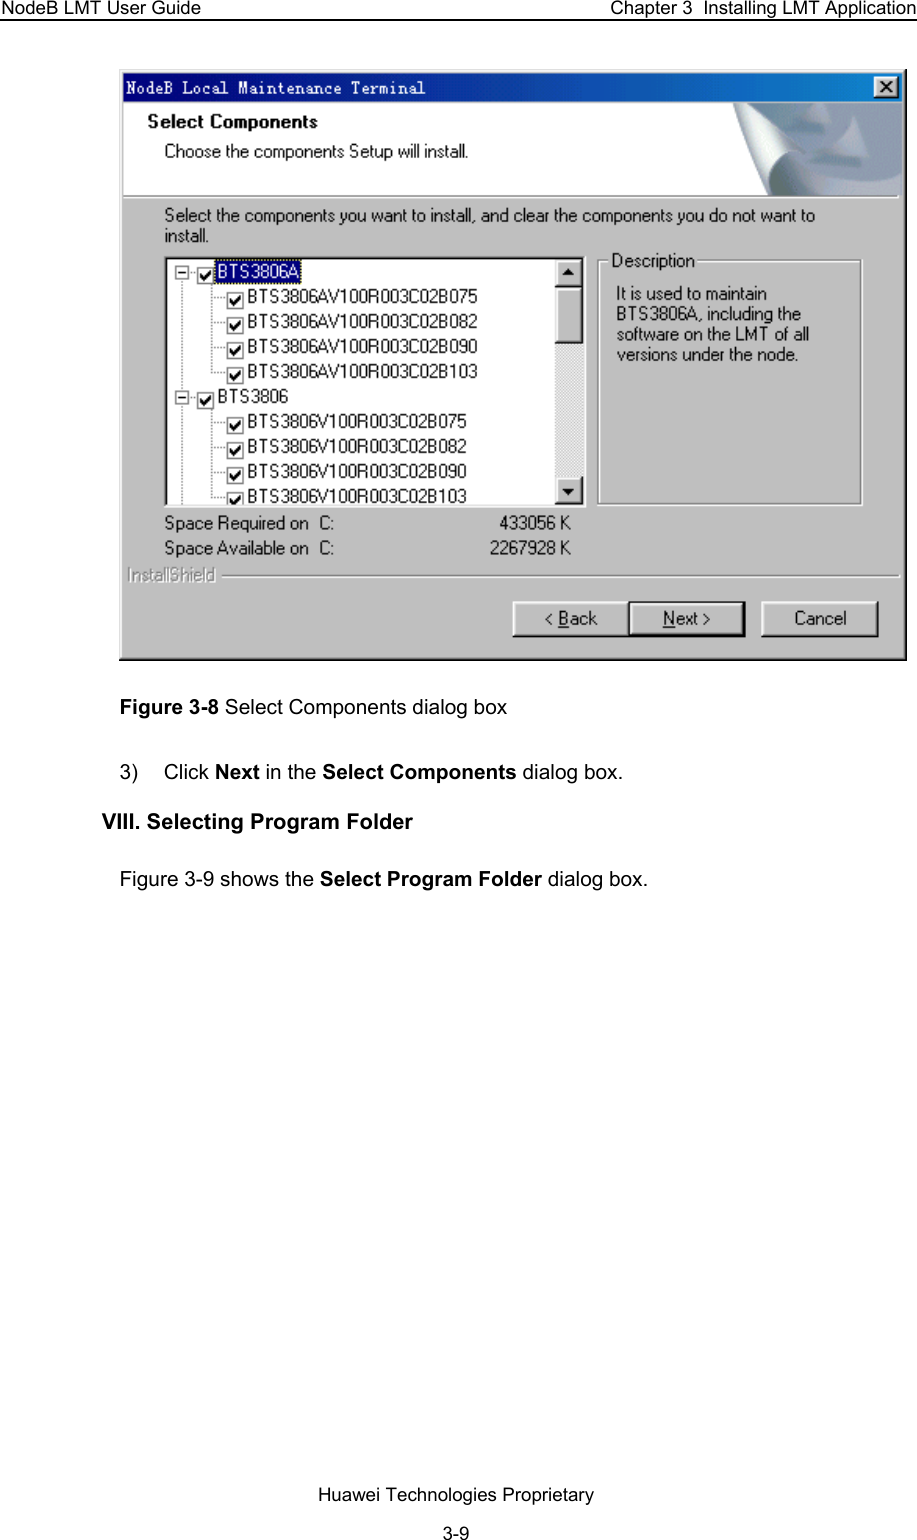 NodeB LMT User Guide  Chapter 3  Installing LMT Application  Figure 3-8 Select Components dialog box 3) Click Next in the Select Components dialog box.  VIII. Selecting Program Folder  Figure 3-9 shows the Select Program Folder dialog box.  Huawei Technologies Proprietary 3-9 